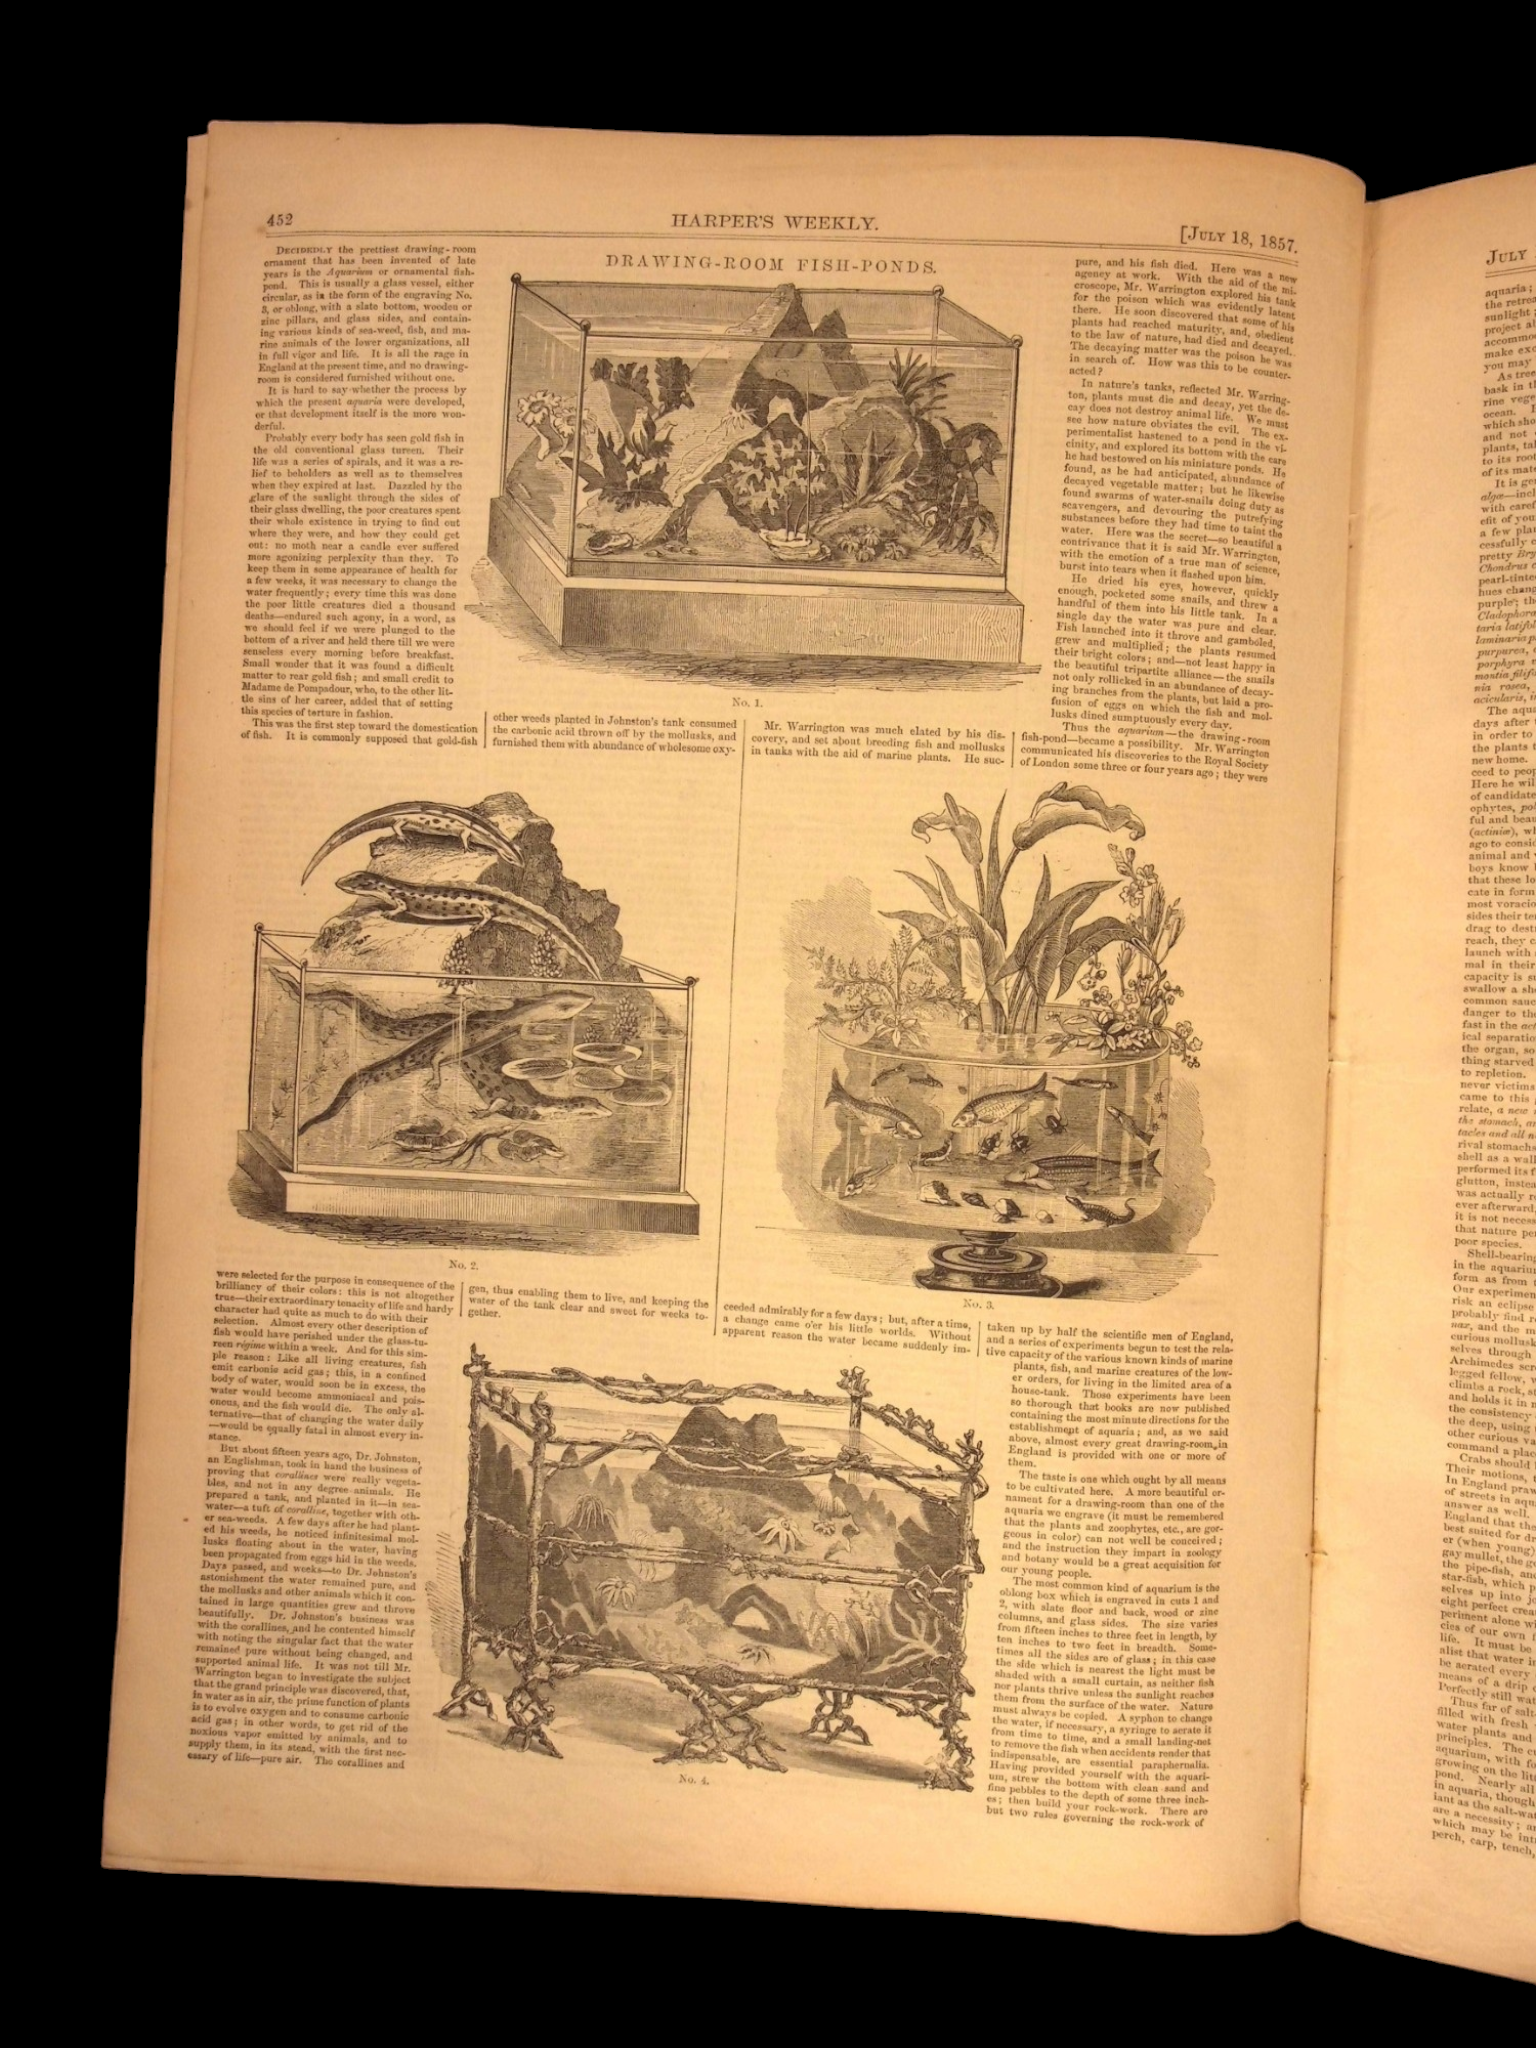 Harper's Weekly: Aquarium Illustrations, Middle Eastern Travel, "The Siamese" — Jul. 18, 1857